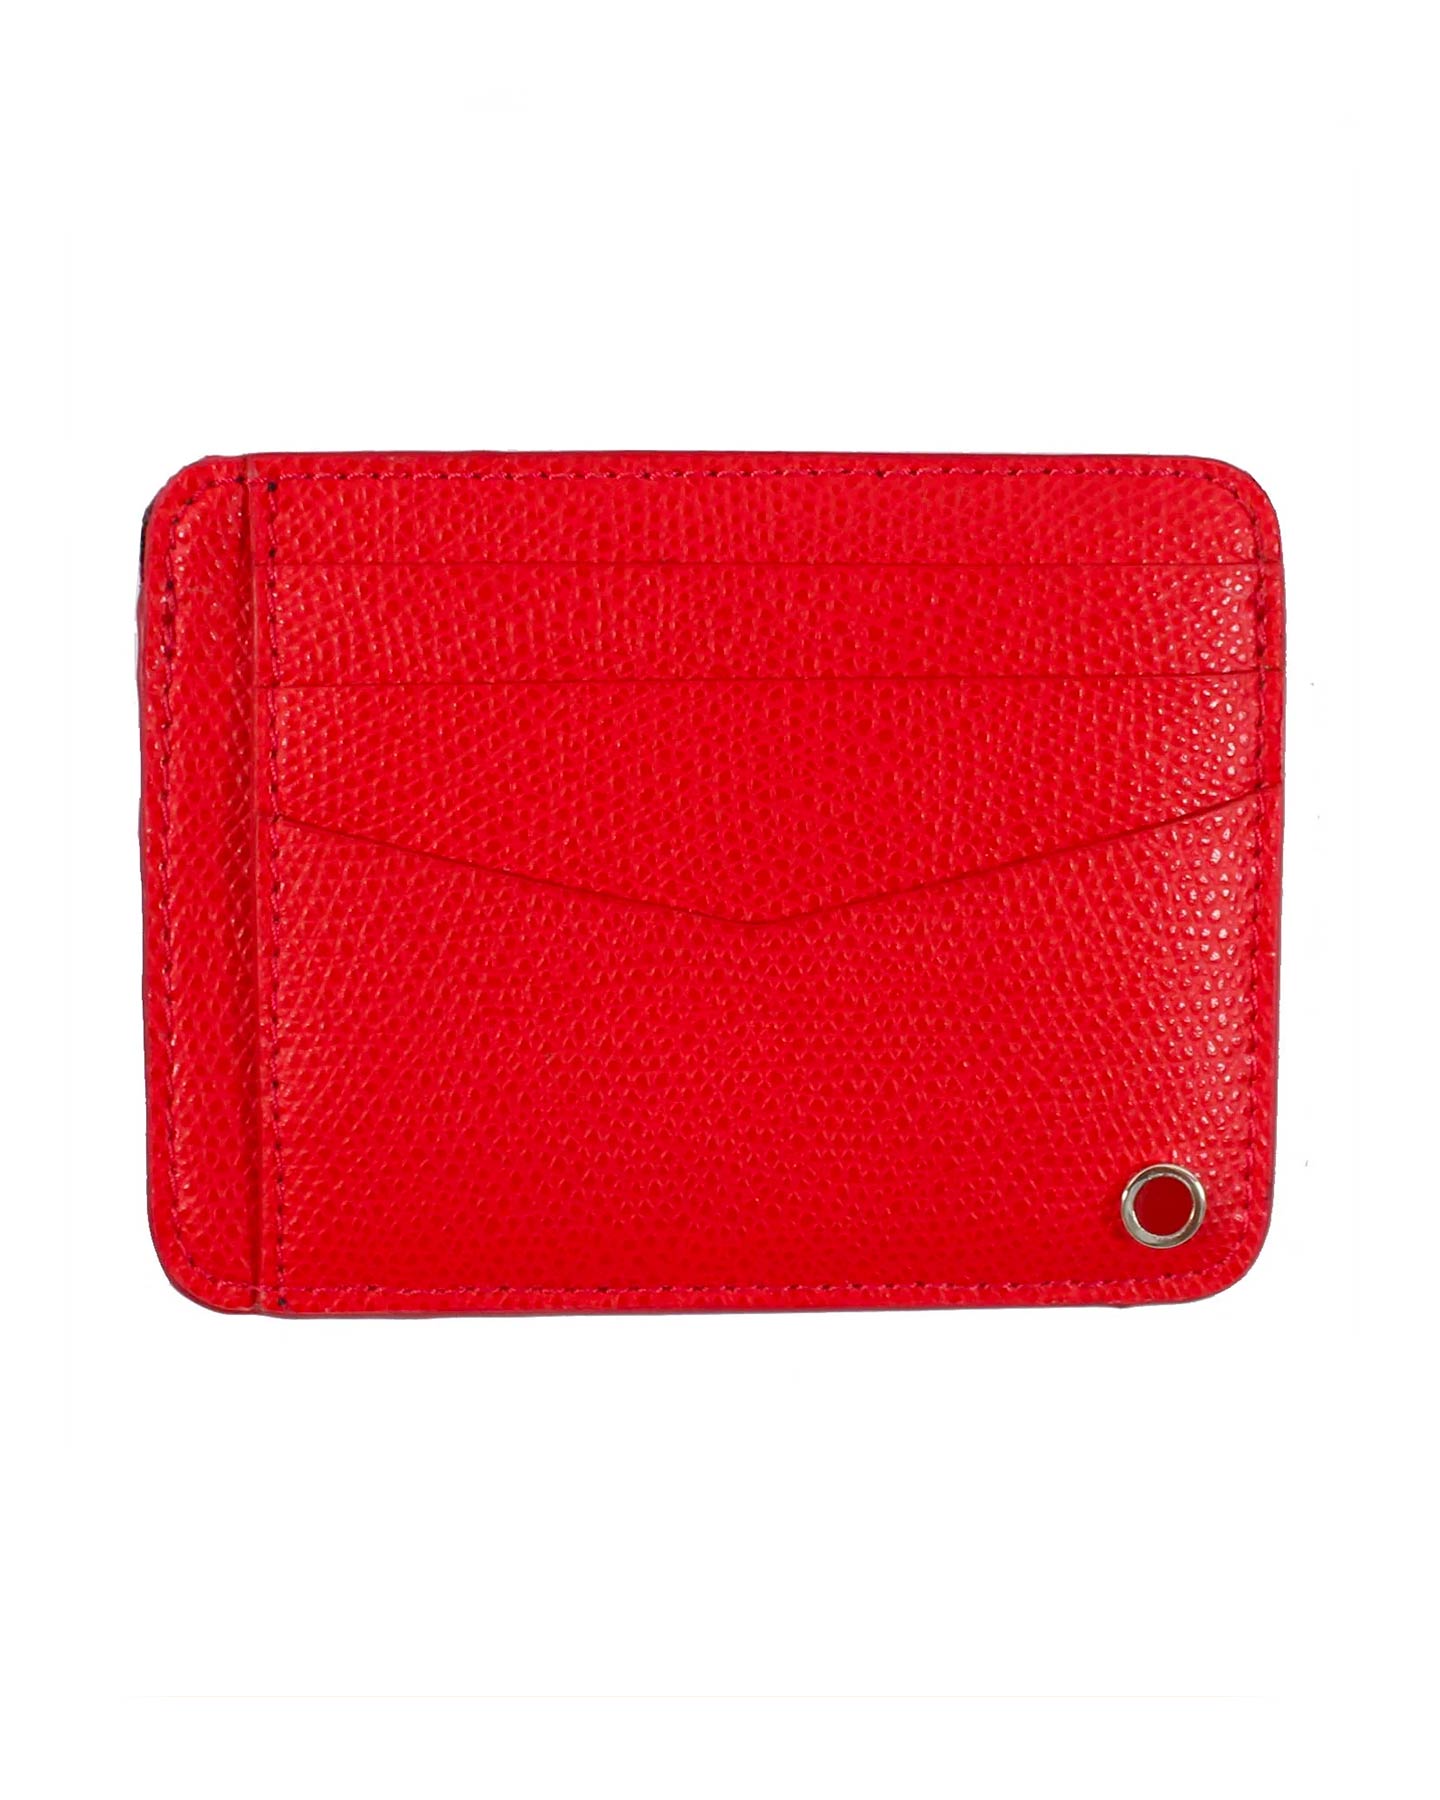 Kiton Wallet - Burgundy Leather Men Wallet/ Credit Card Holder SALE - Tie  Deals